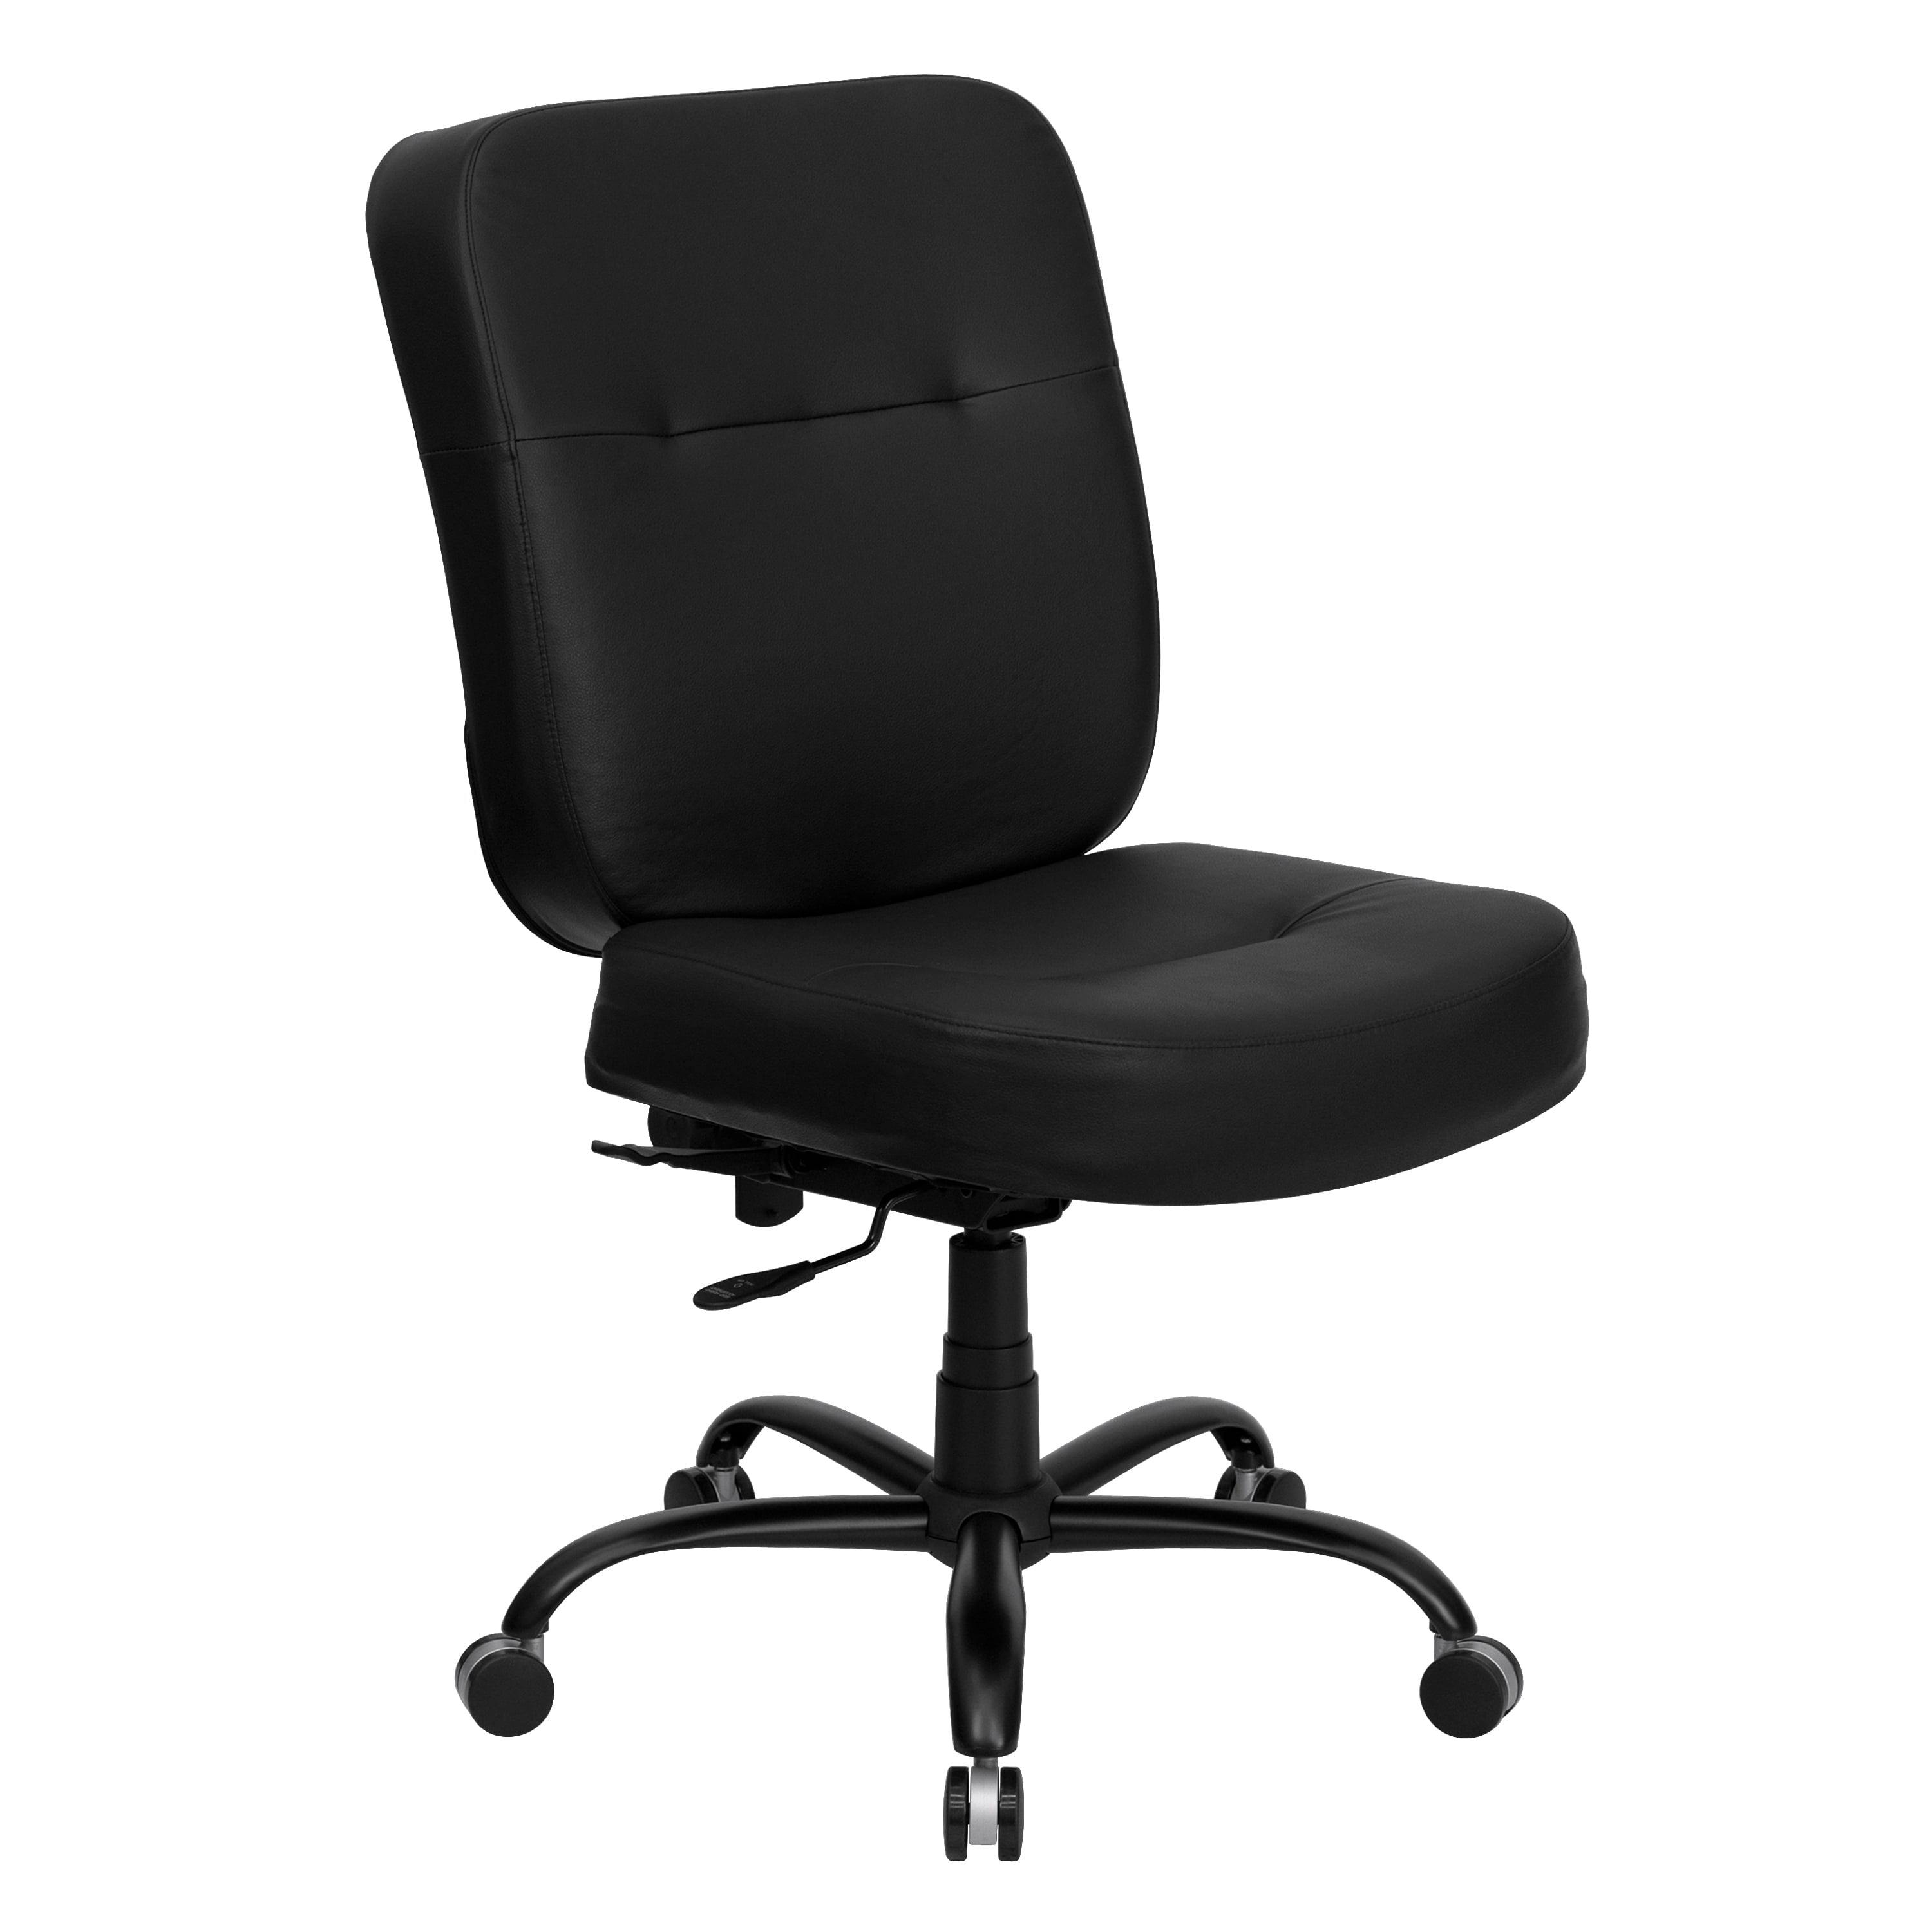 Hercules High-Back Black LeatherSoft Executive Swivel Chair